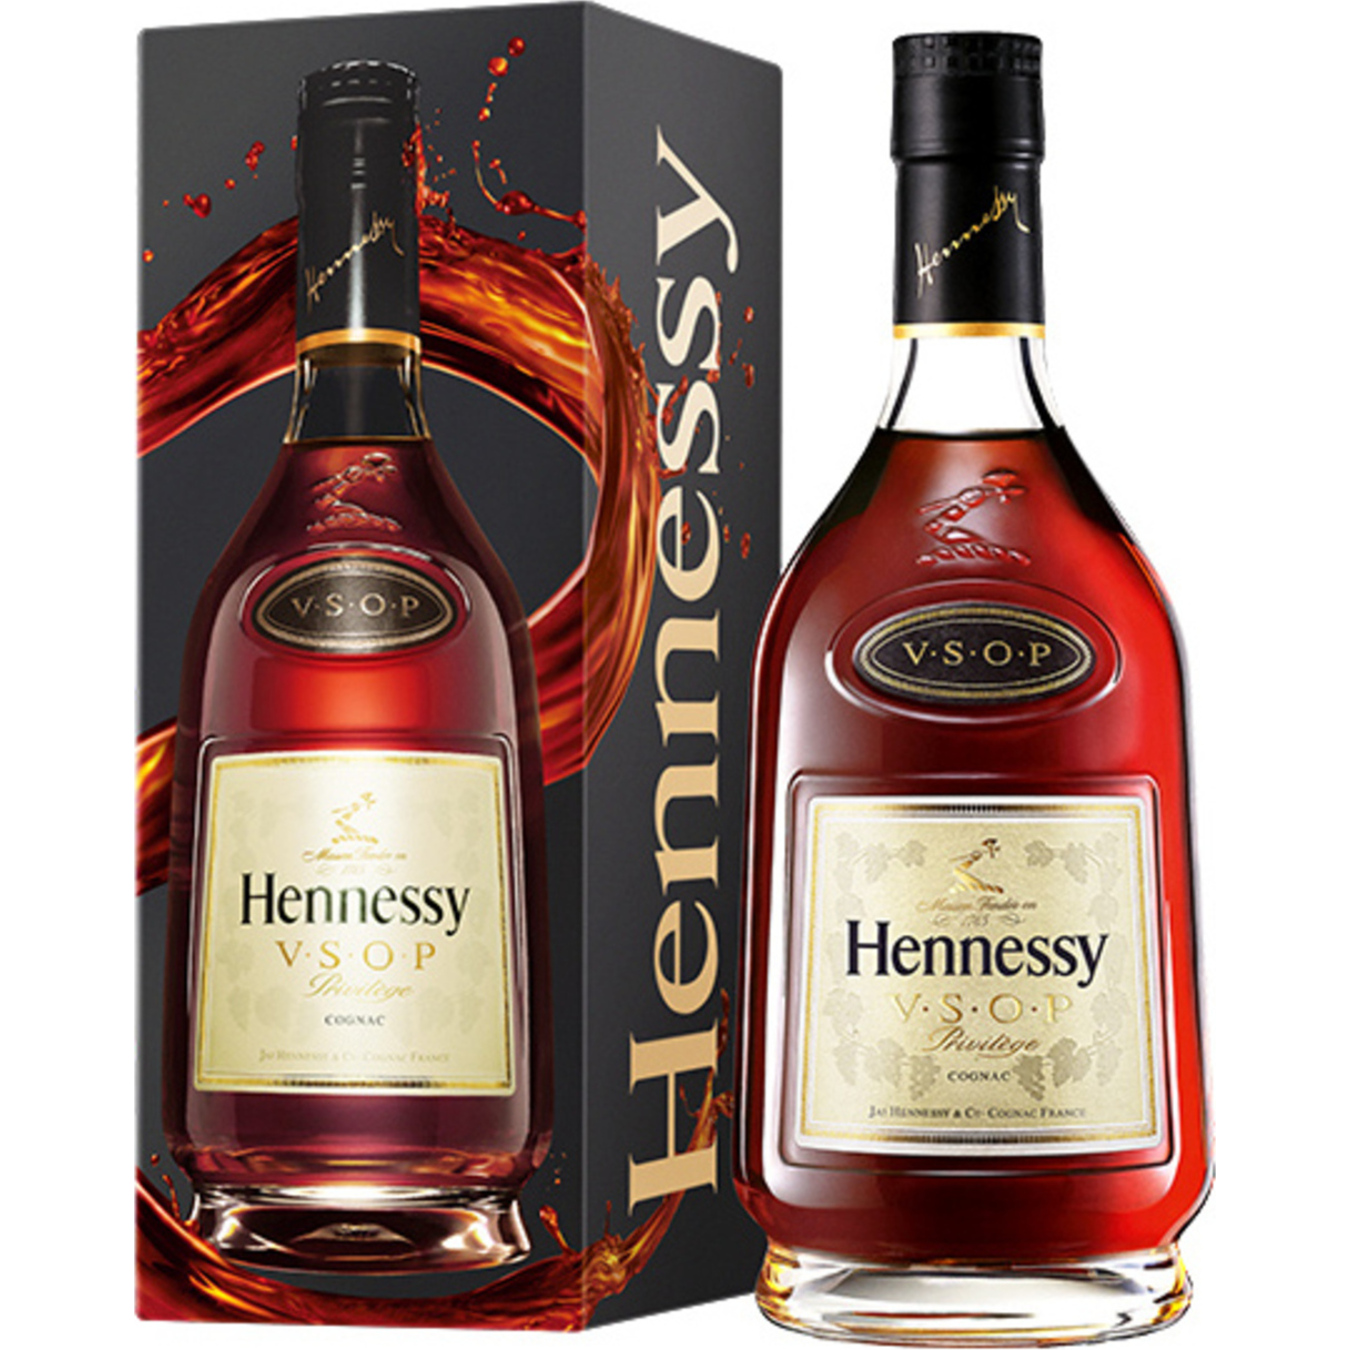 Cognac Hennessy V.S.O.P. 40% 0,7l